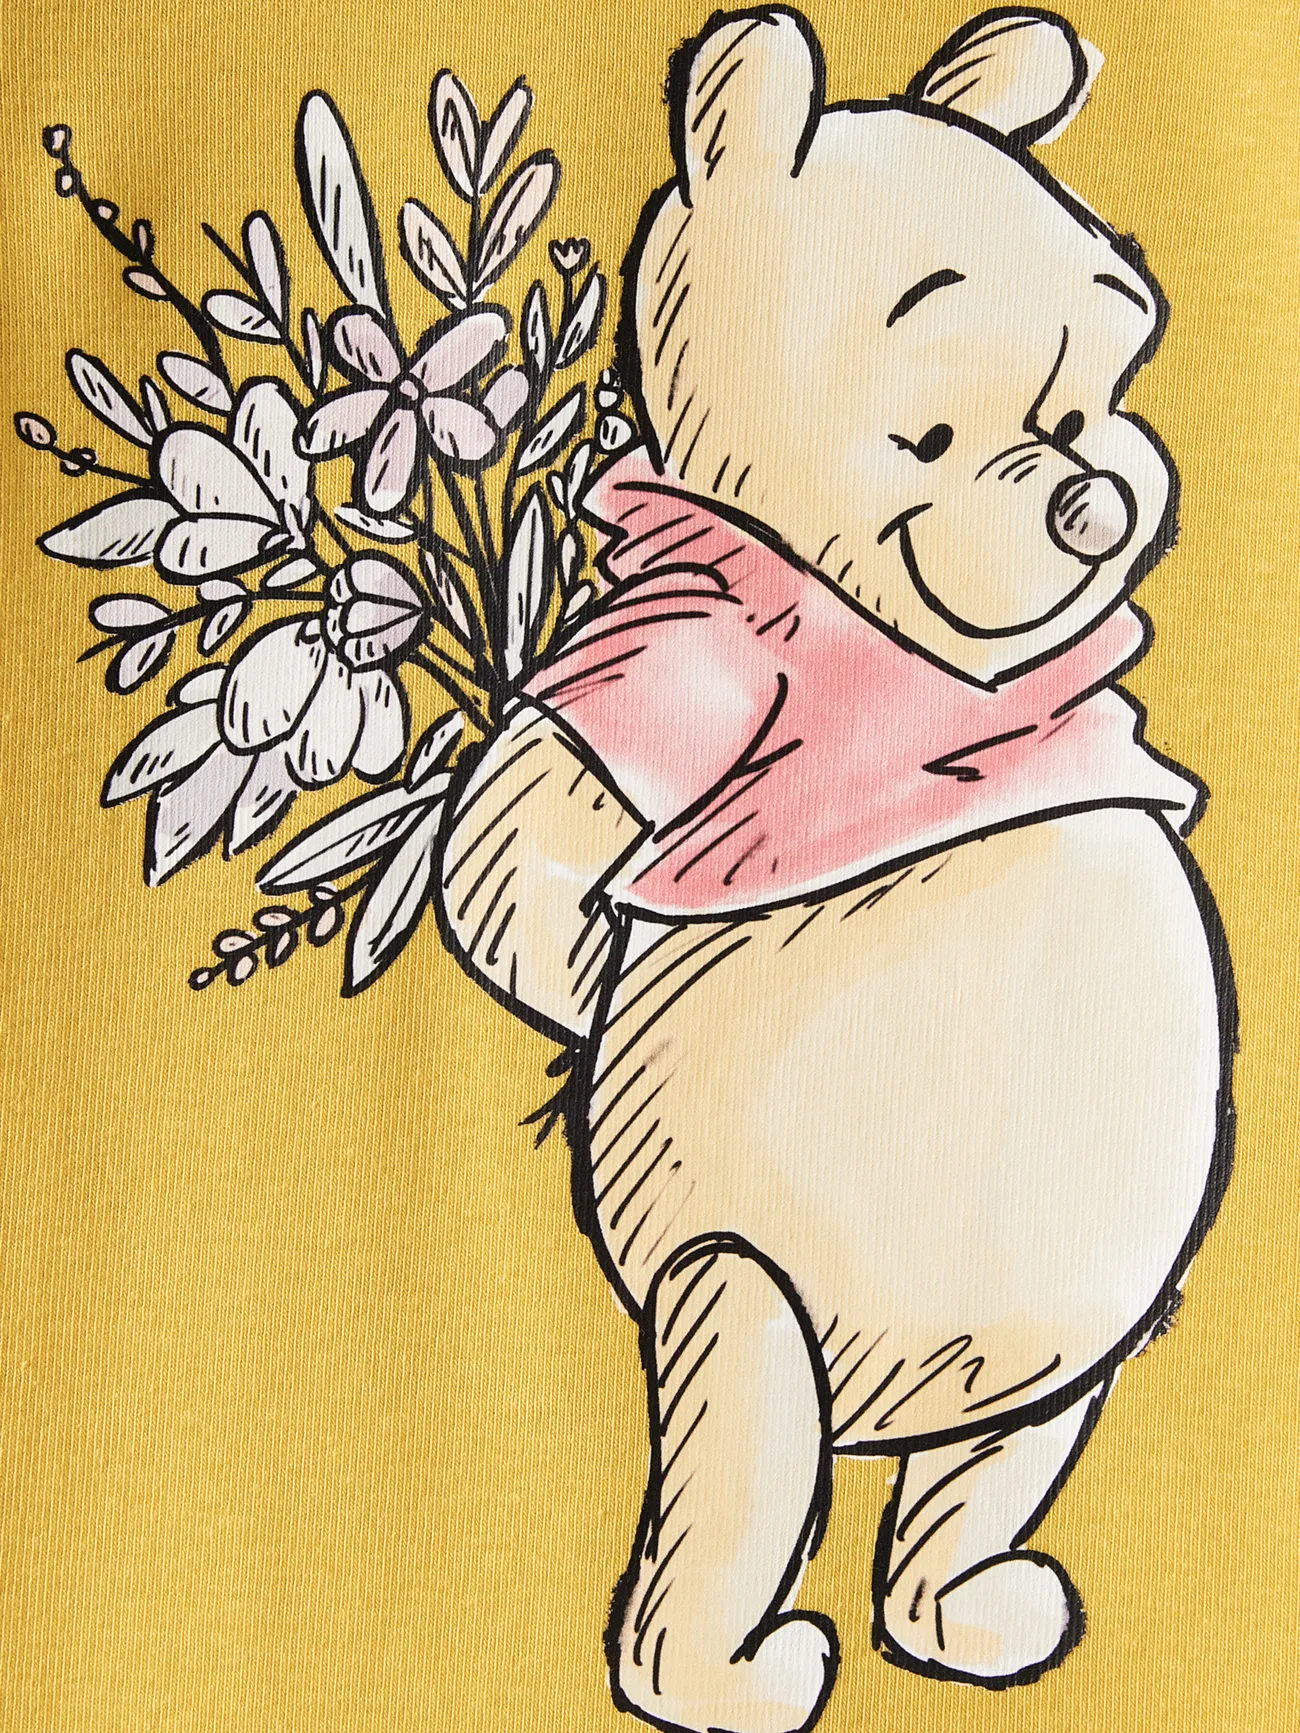 Disney Winnie the Pooh 母親節 短袖 連衣裙 媽咪寶寶裝 彩色 big image 1